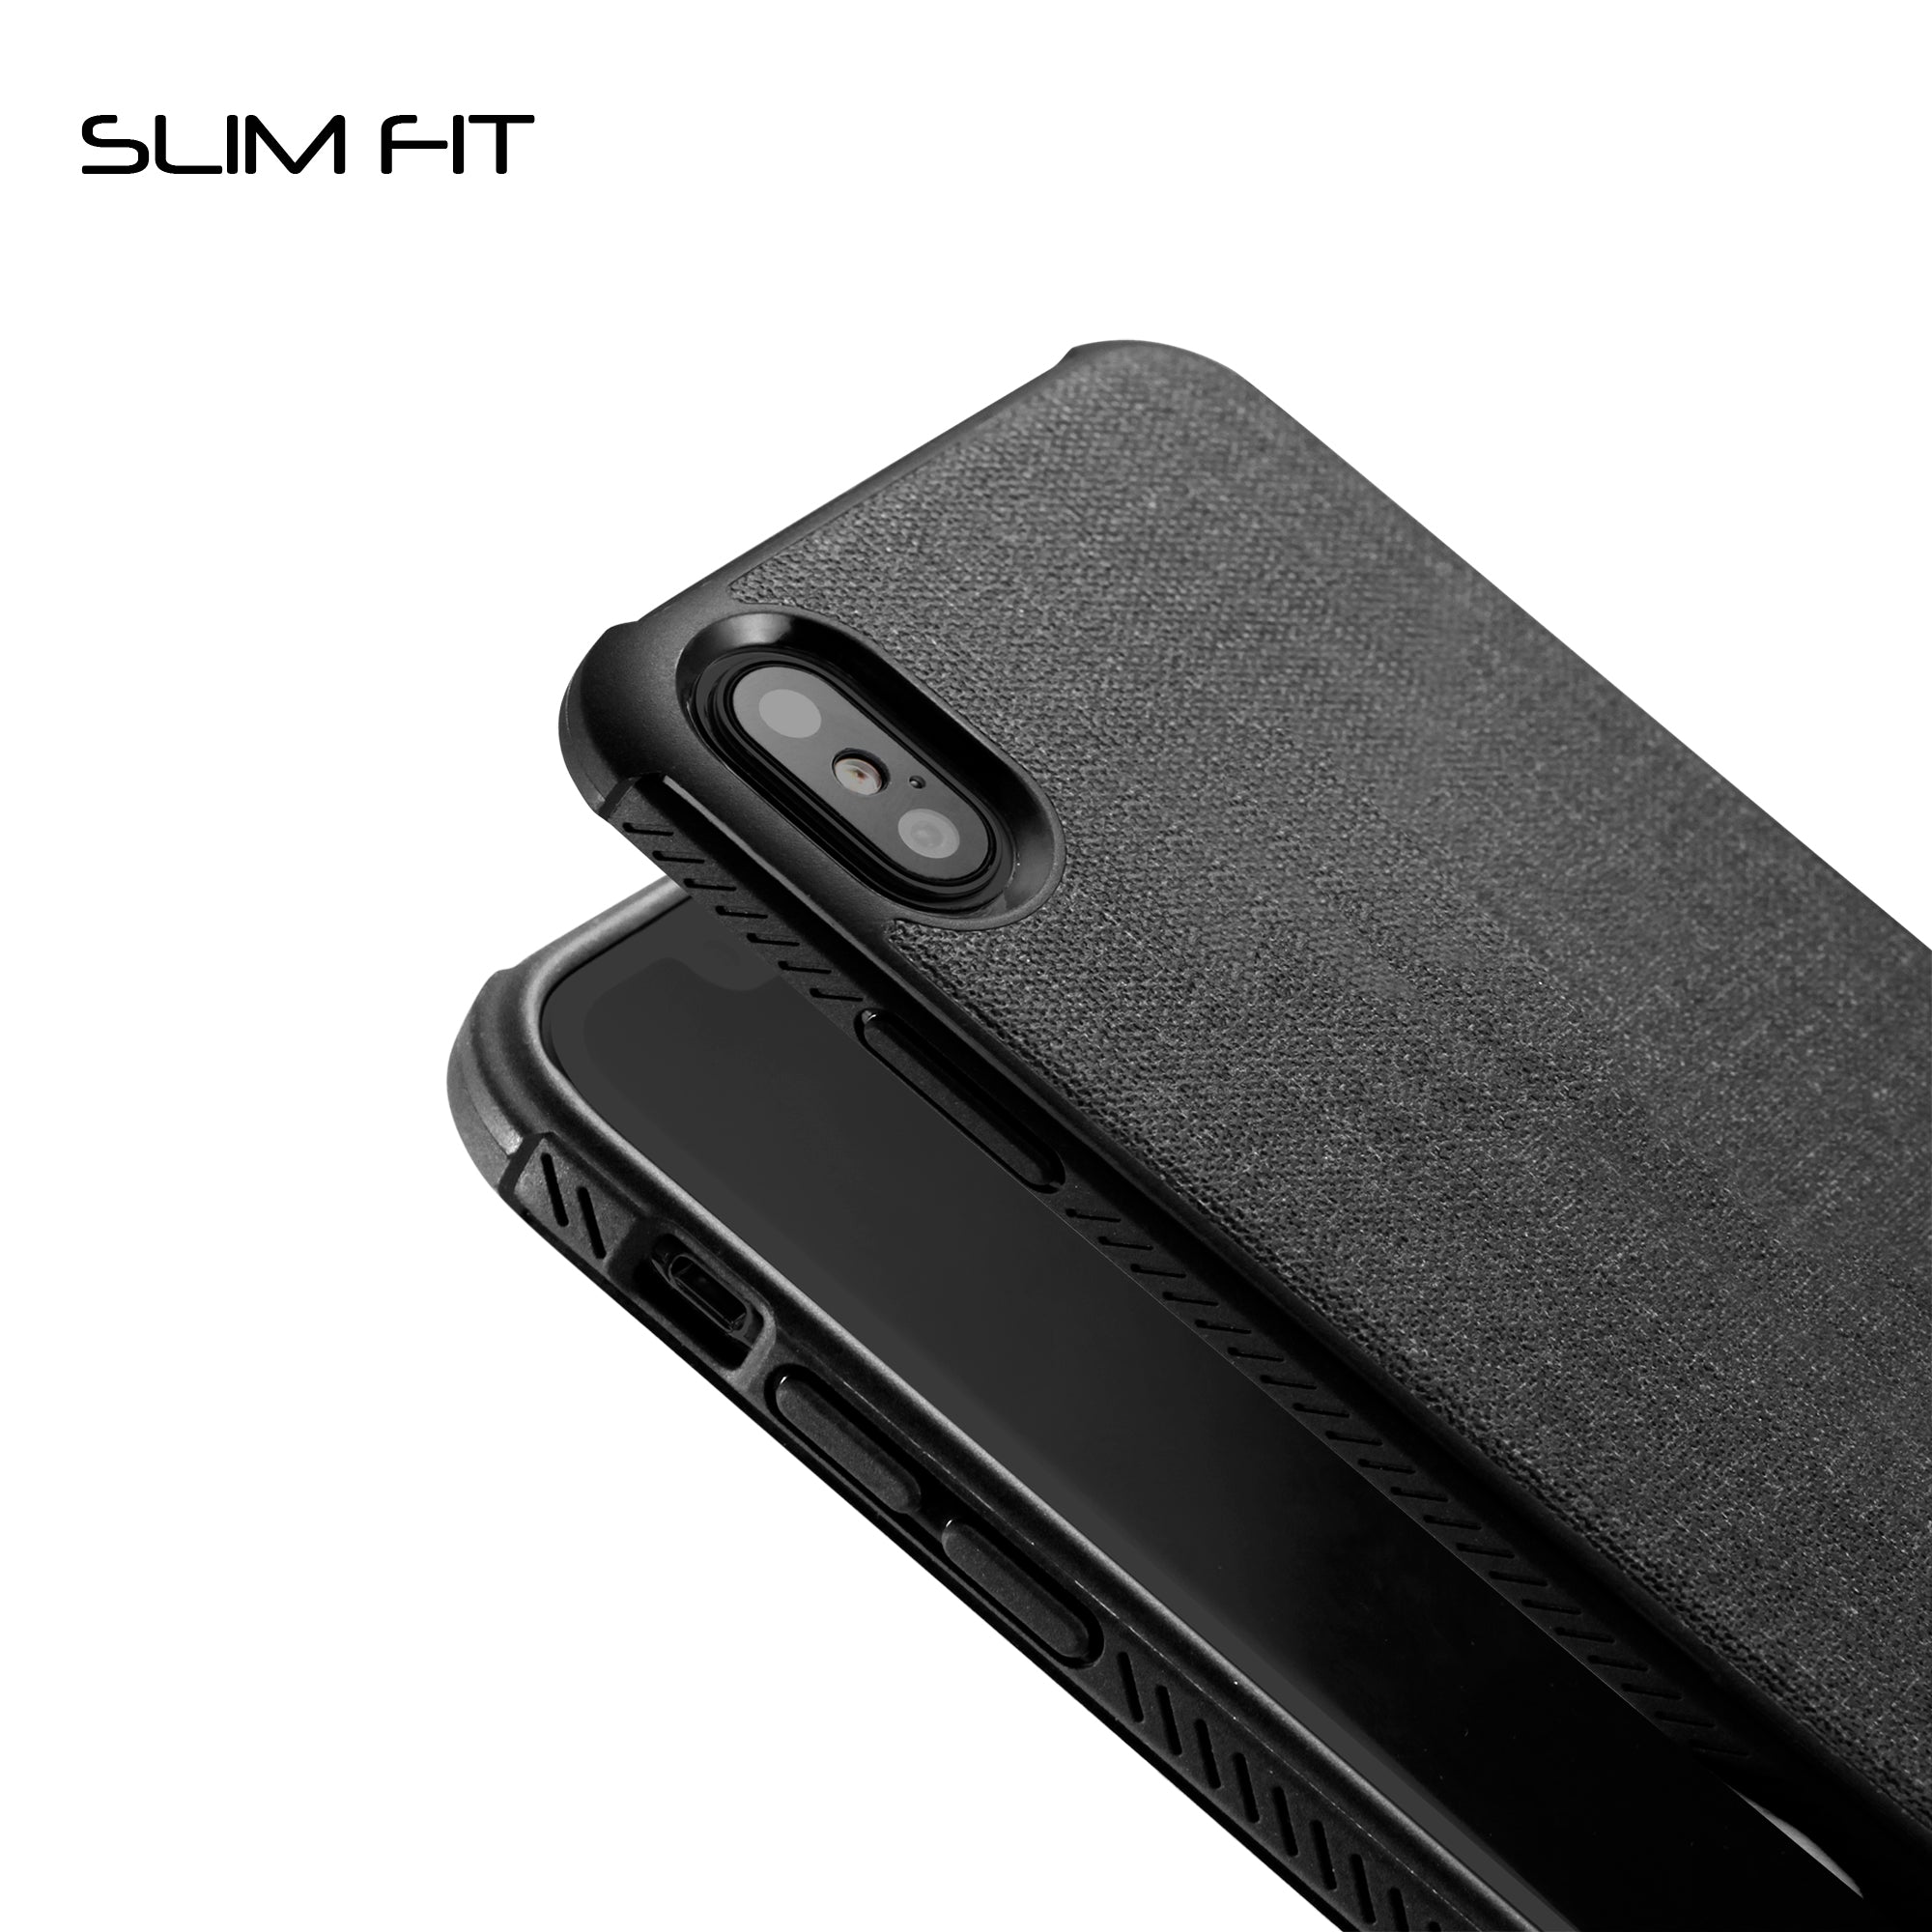 Luvvitt Sleek Armor Case with Fabric for iPhone X / XS - Black / Carbon Fiber